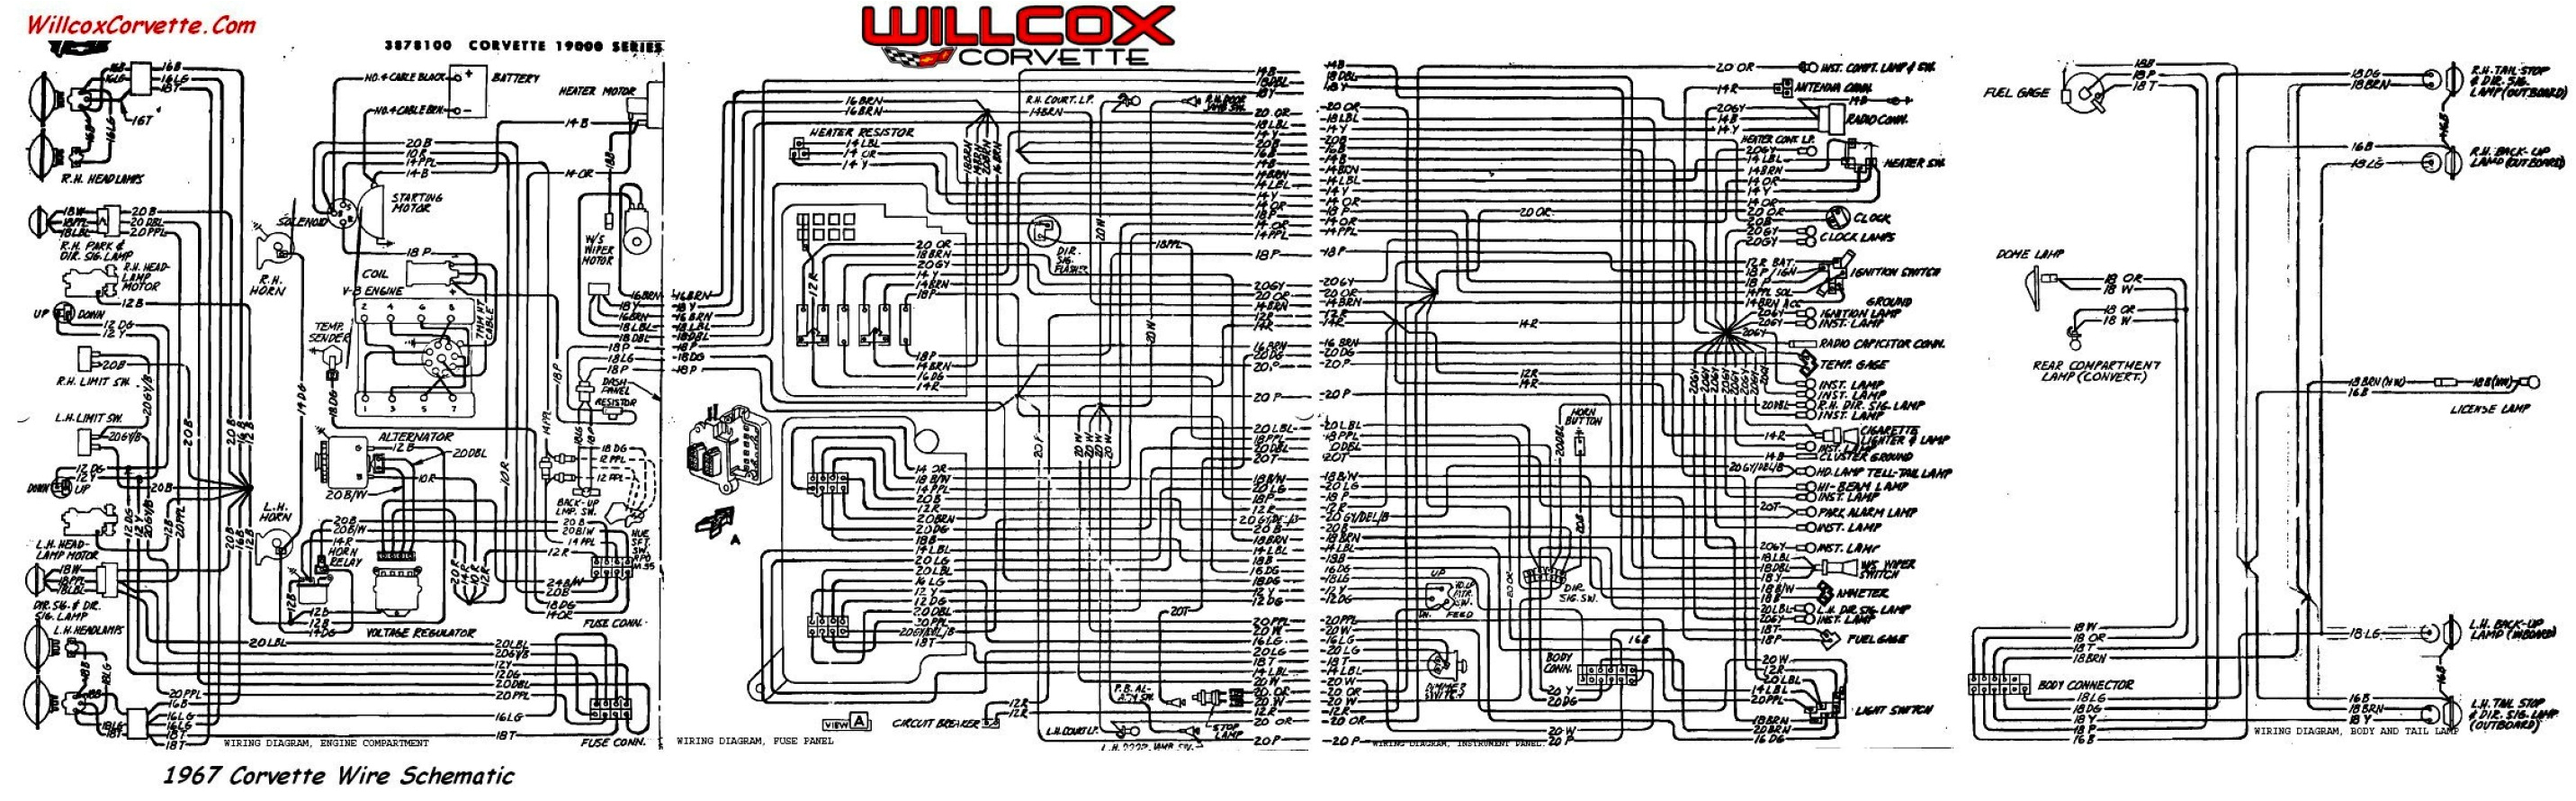 1978 corvette engine diagram wiring diagram name 1986 corvette wiring diagram pdf